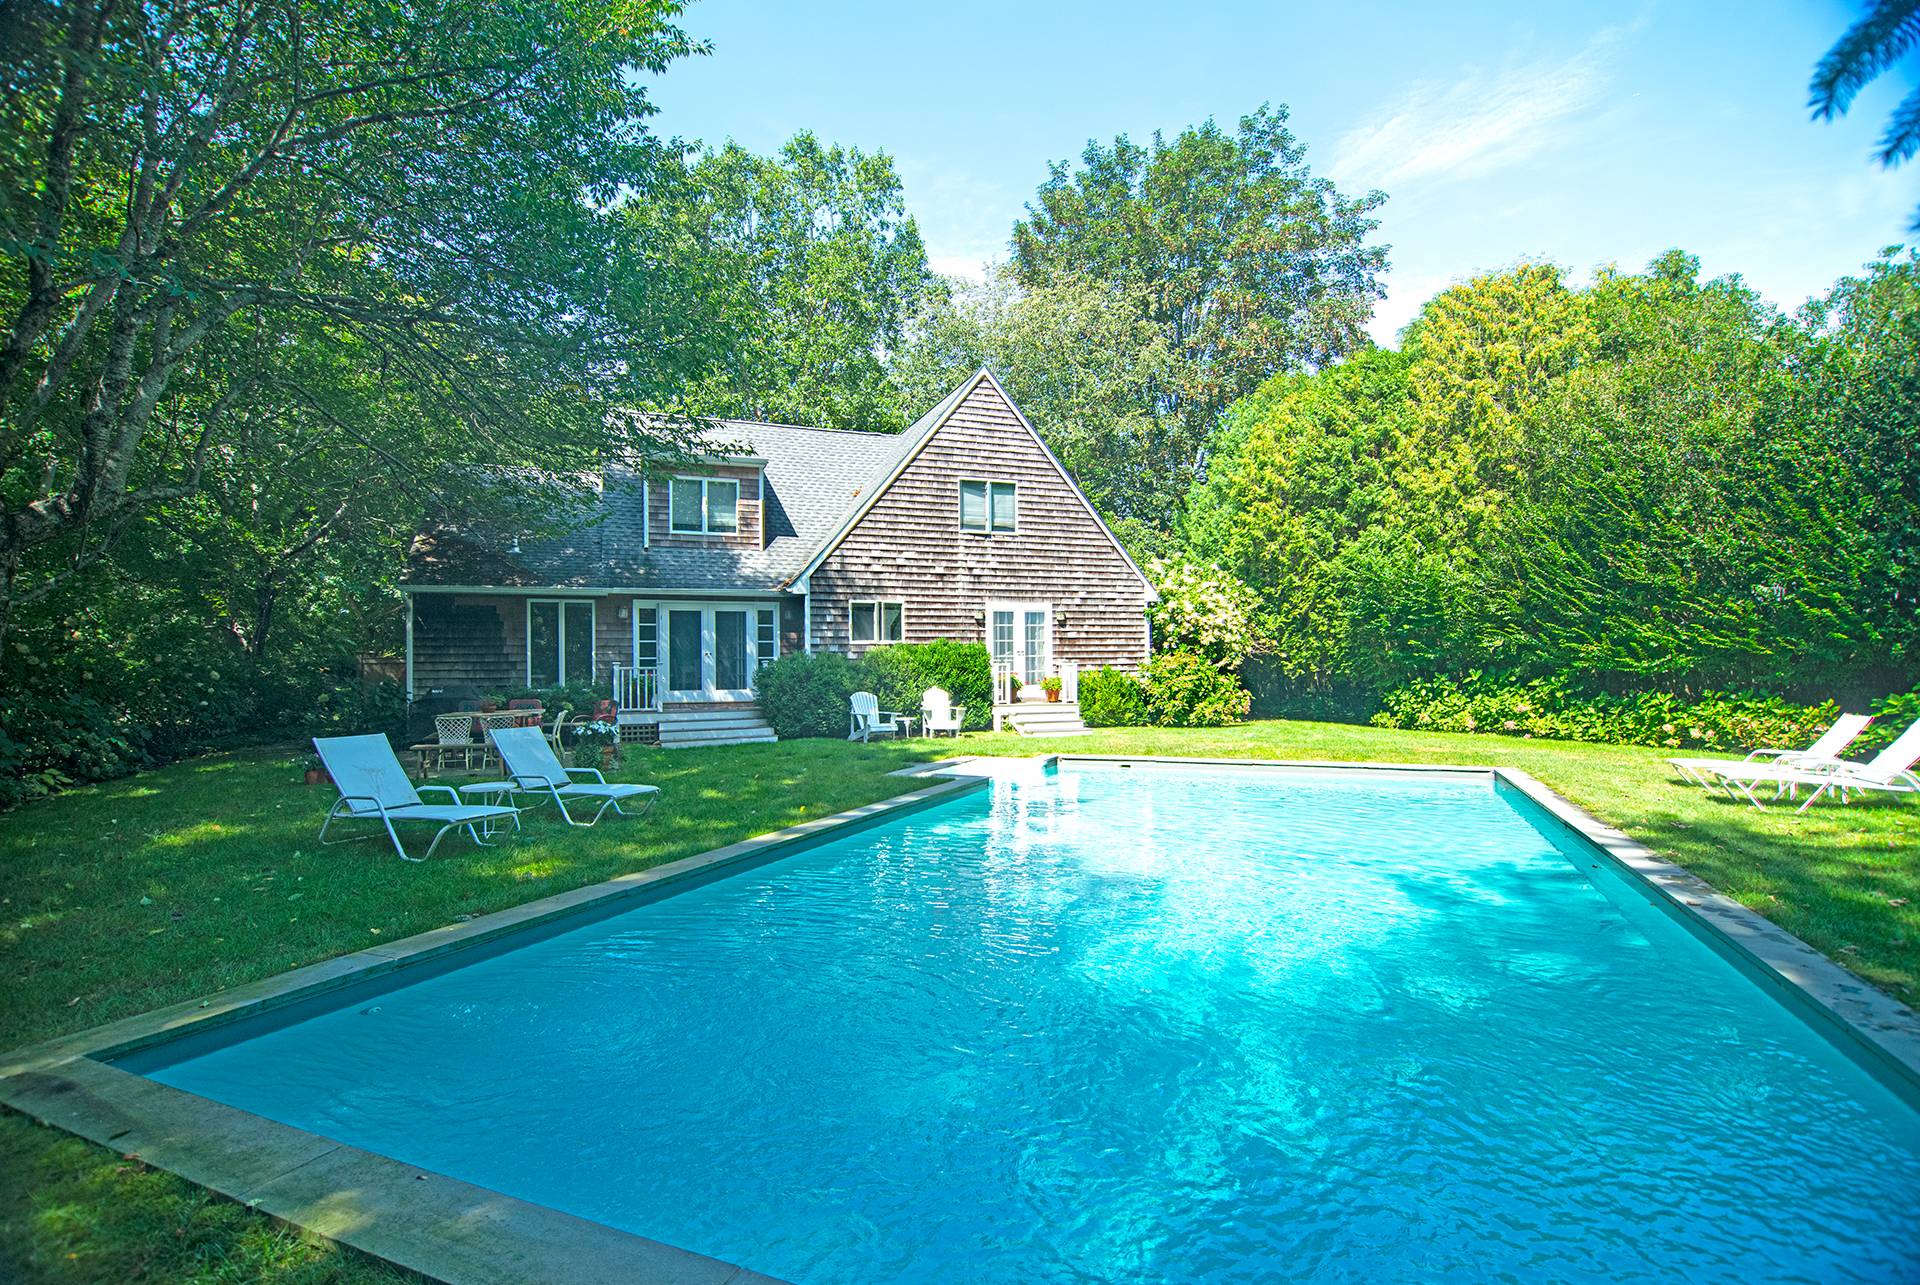 Rental Property at East Hampton, East Hampton, Hamptons, NY - Bedrooms: 4 
Bathrooms: 3.5  - $30,000 MO.